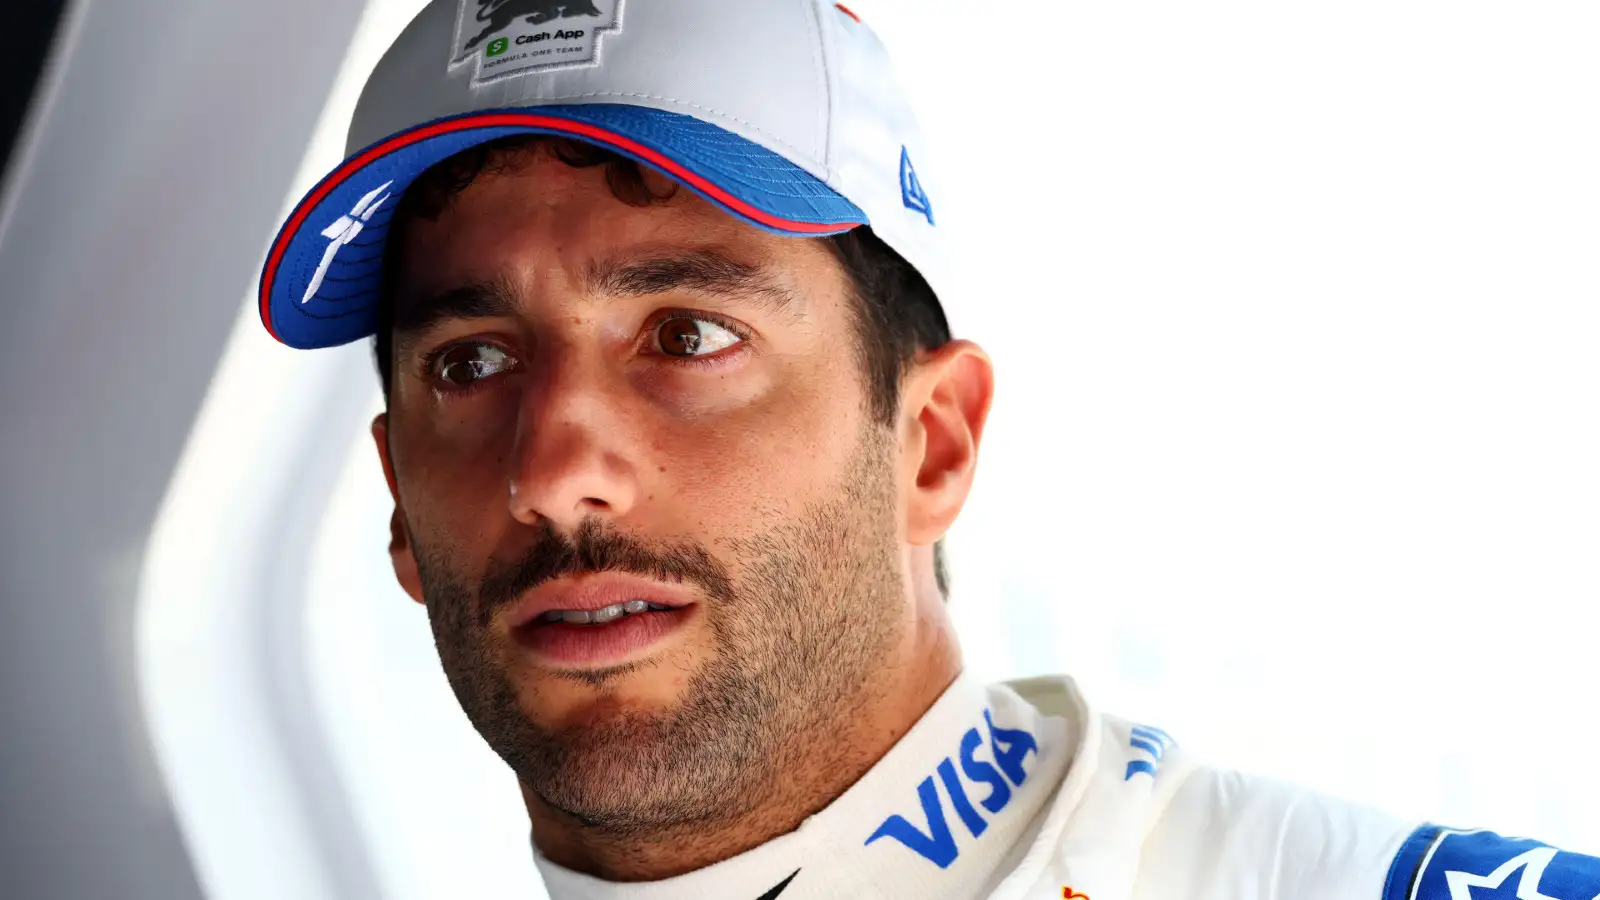 Daniel Ricciardo gives 'not so much result-driven' update on his F1 future